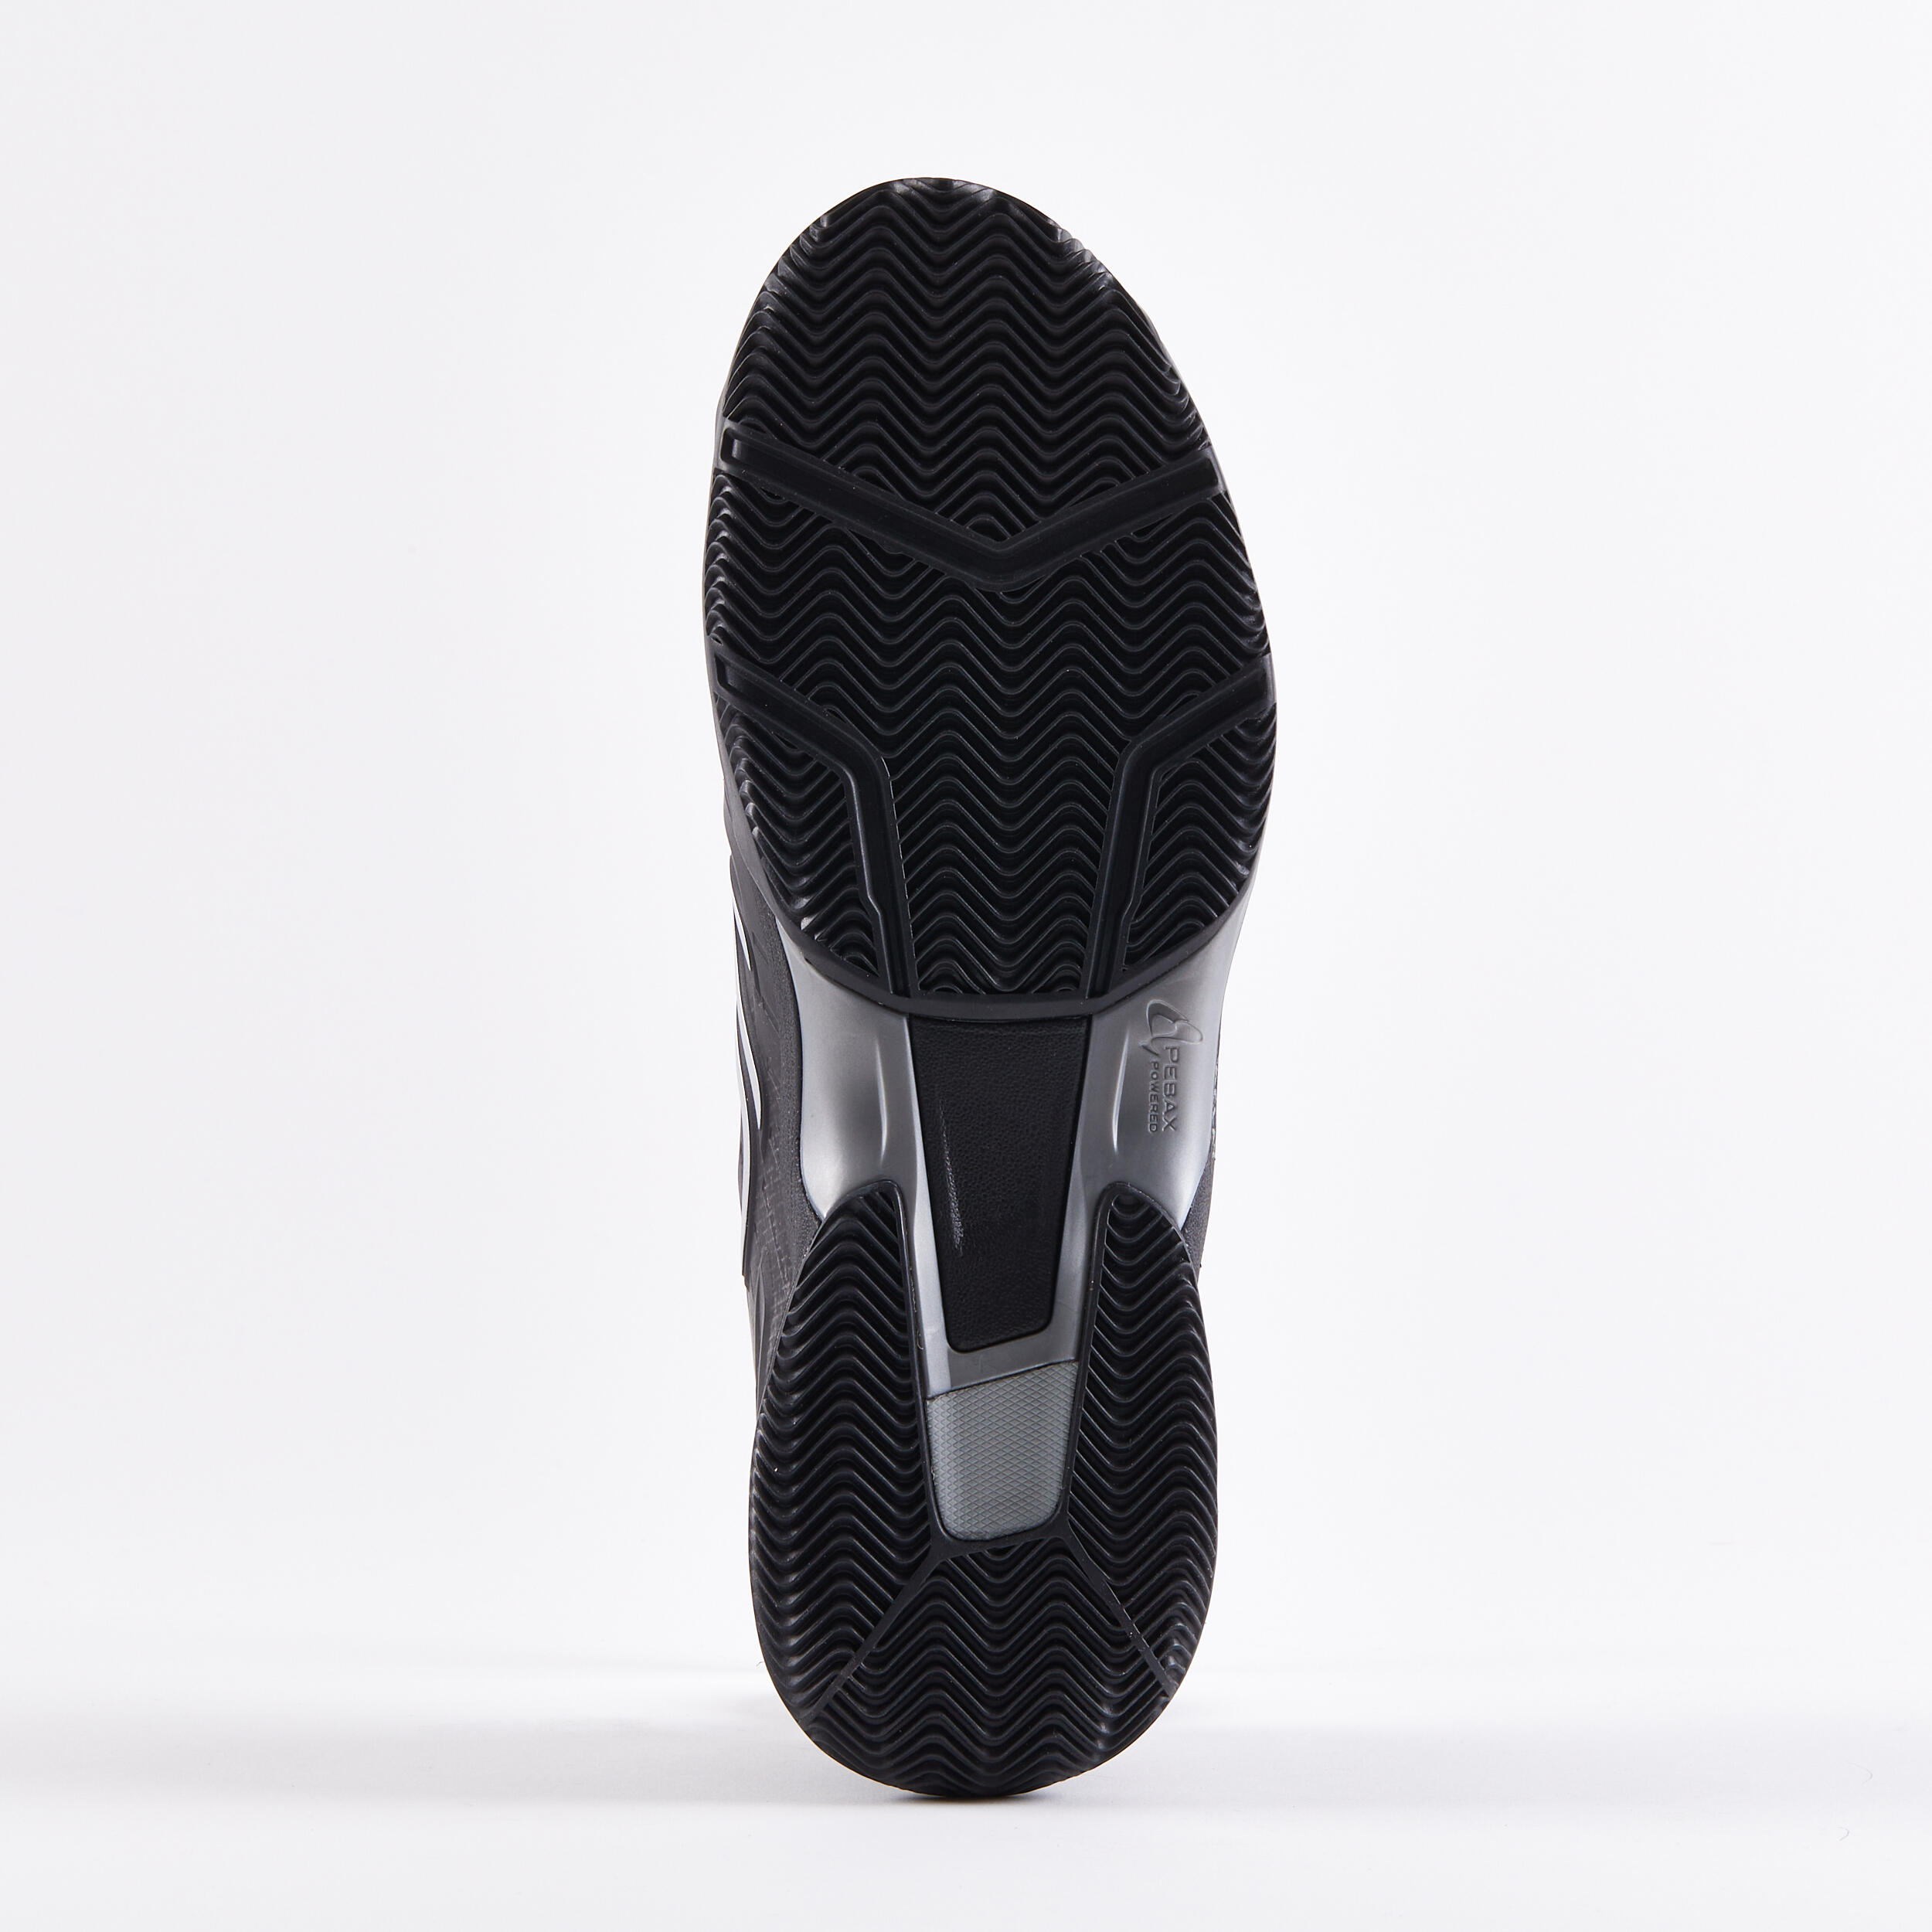 Men's Clay Court Tennis Shoes TS990 - Black 4/8